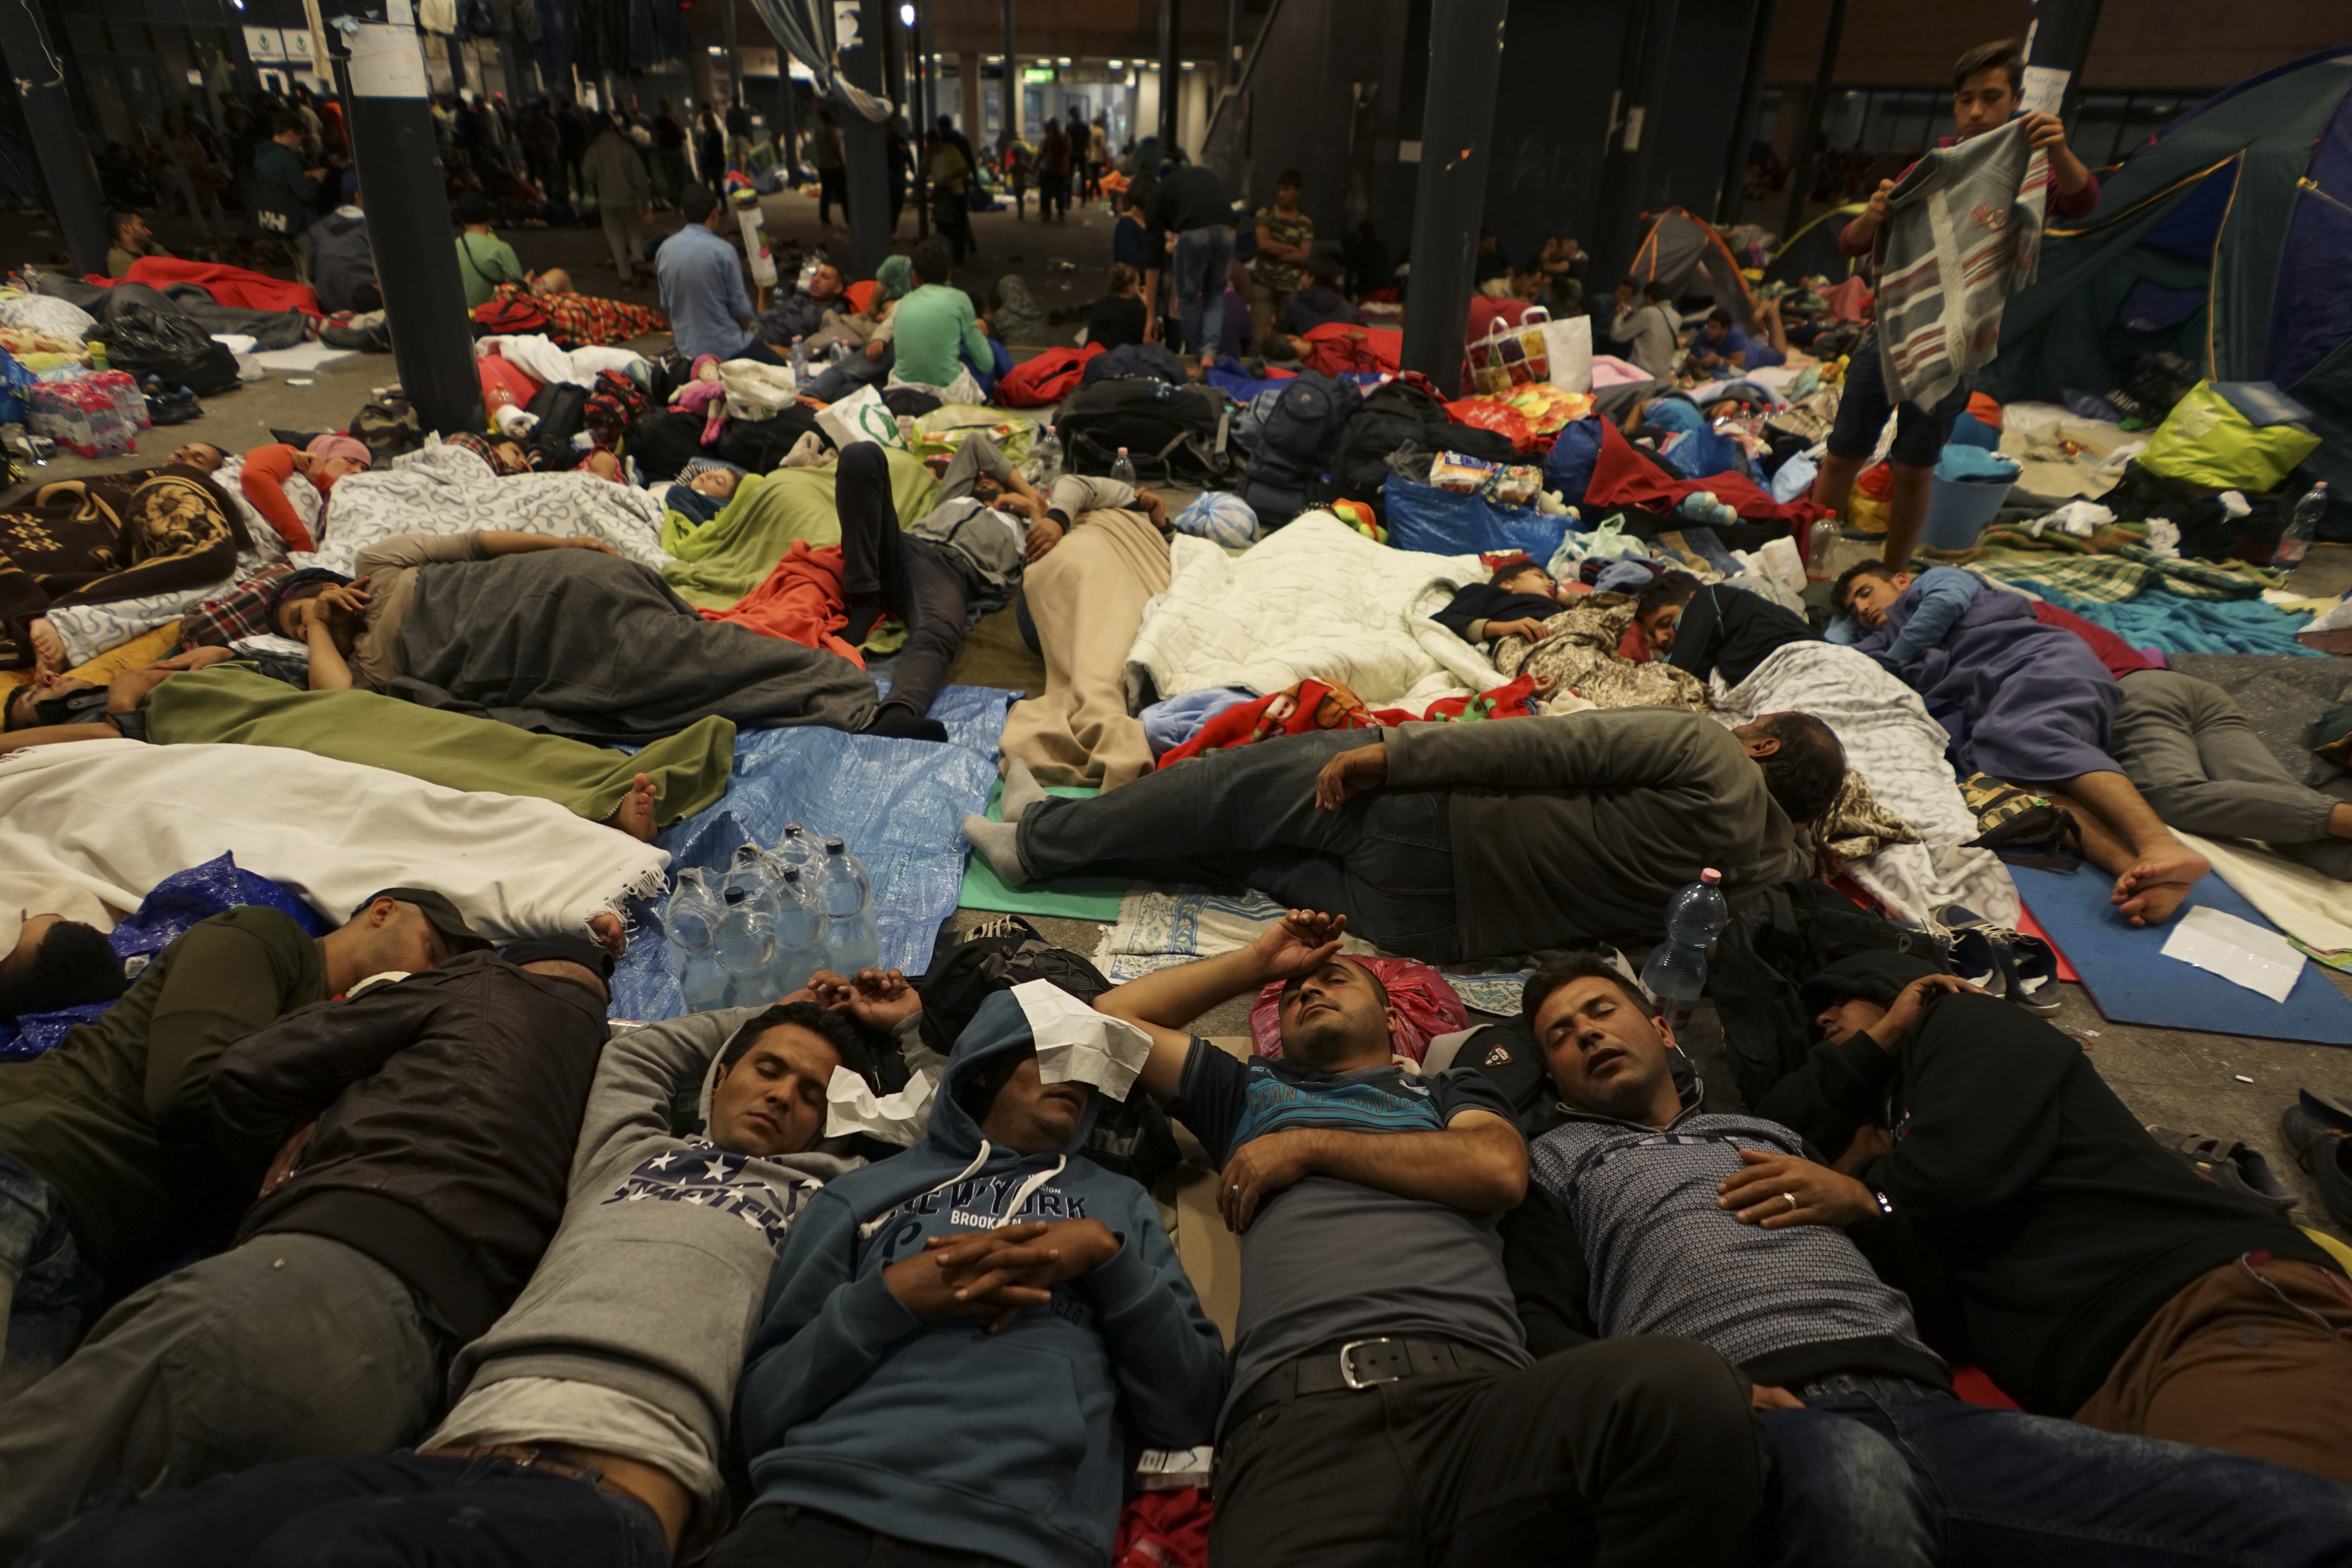 Syrian refugees having rest at the floor of Keleti railway station. Refugee crisis. Budapest, Hungary, Central Europe, 5 September 2015.